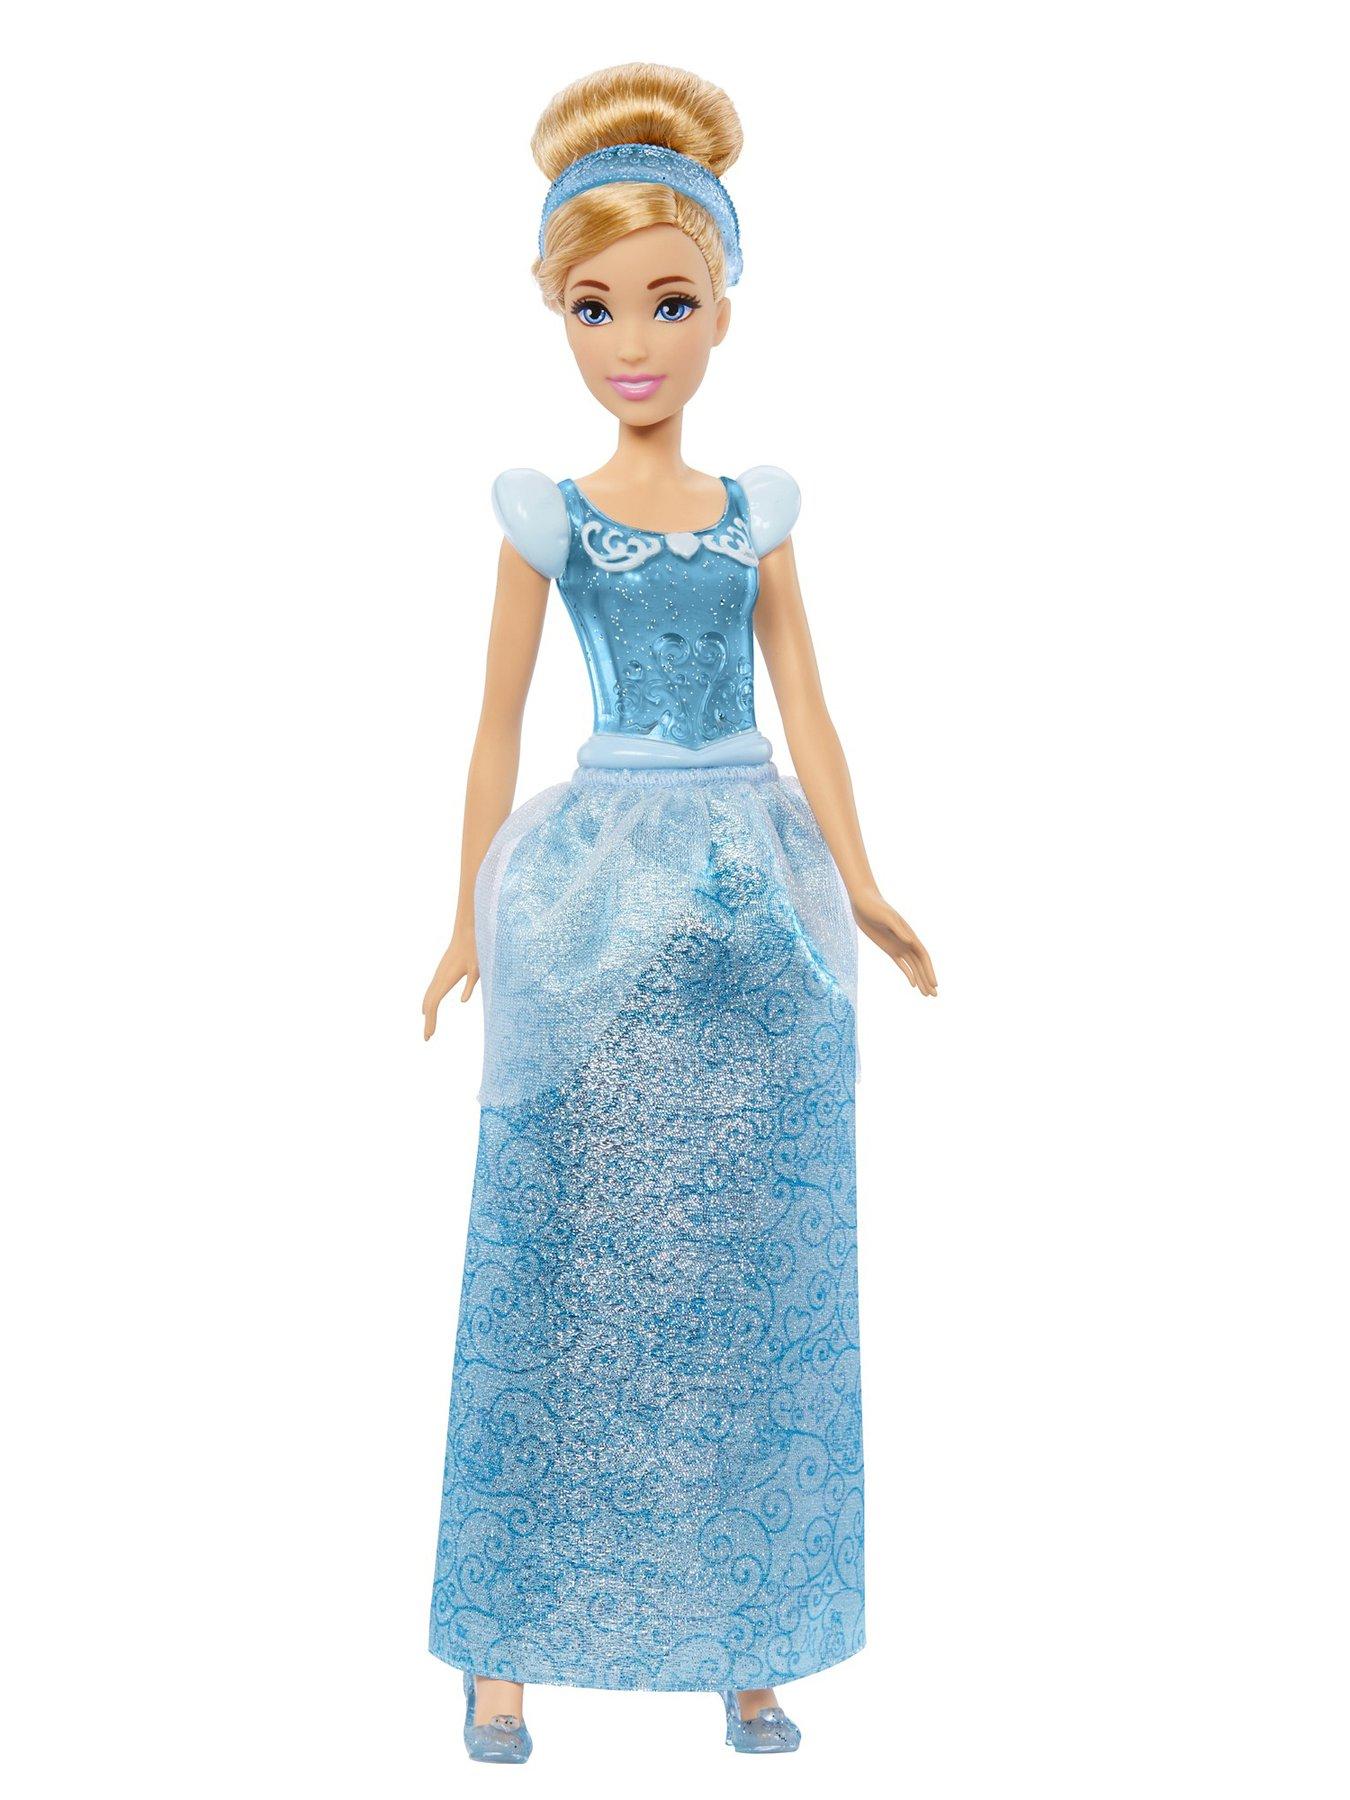 Disney Princess Cinderella Fashion Doll | Very.co.uk